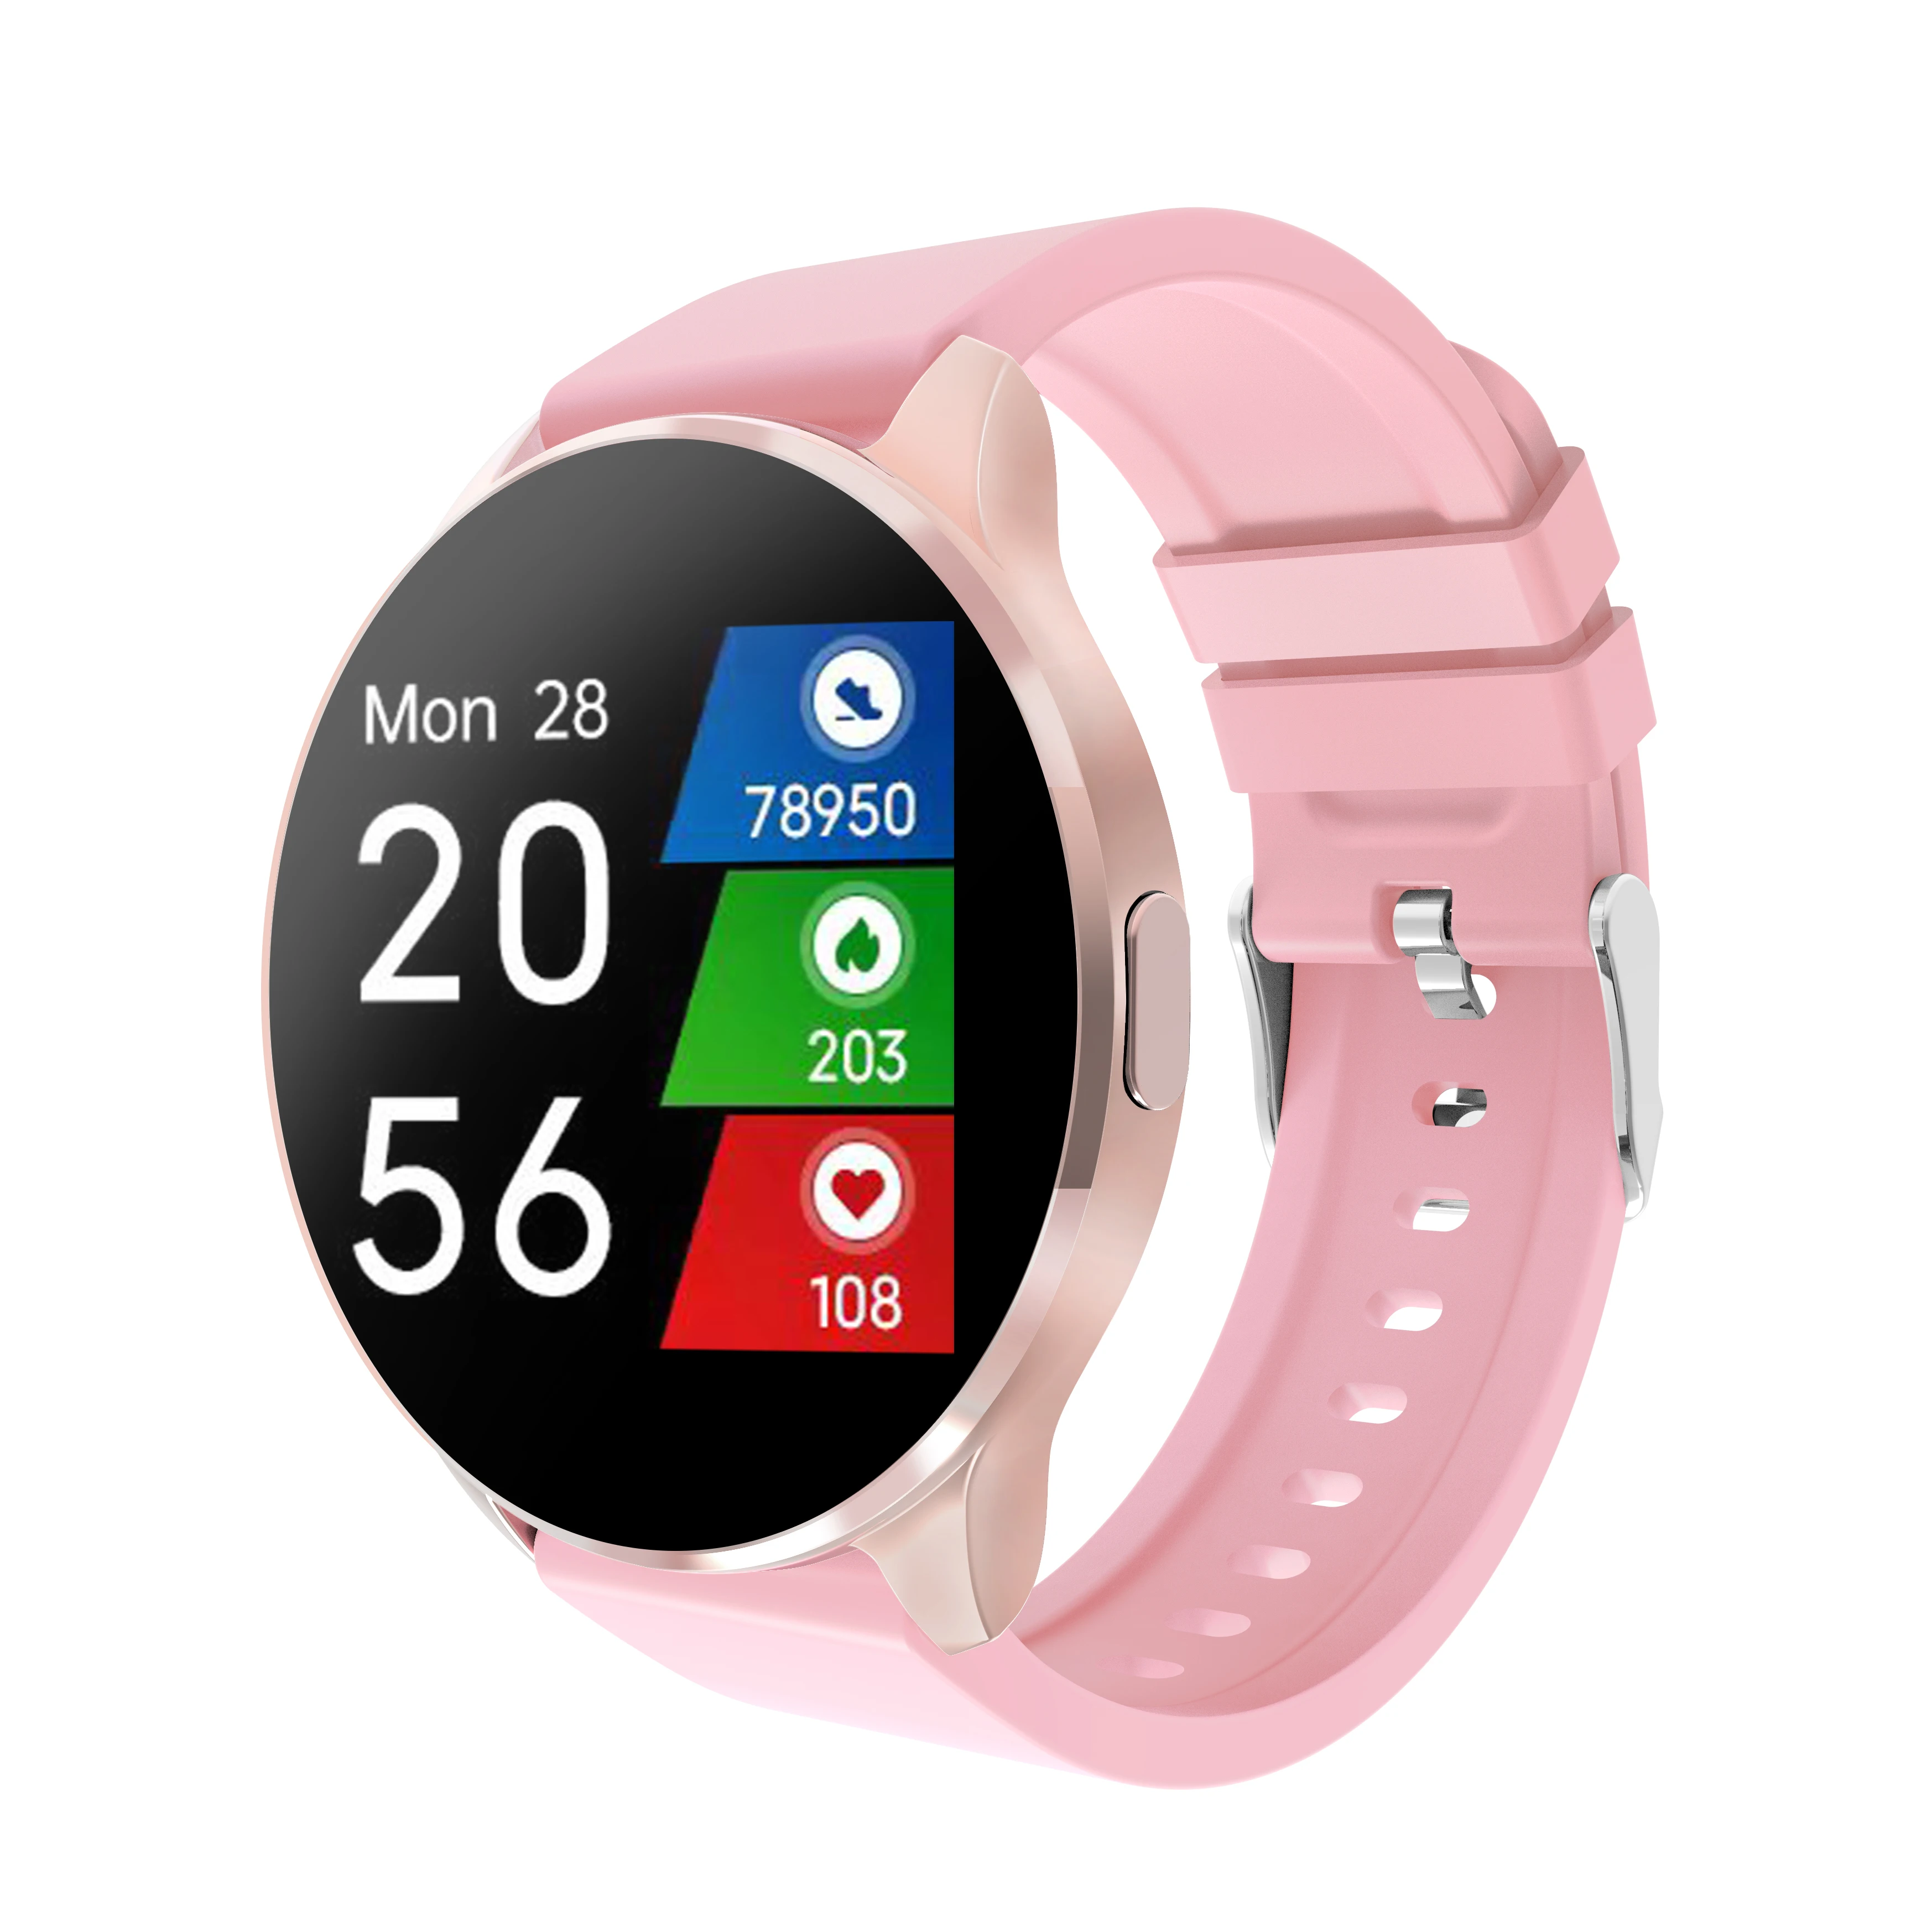 Heerlijk satire ZuidAmerika Wholesale RTS Rw9 smart watch W9 1.3-inch full touch fitness tracker heart  rate blood pressure armband monitor waterproof sport wristband From  m.alibaba.com